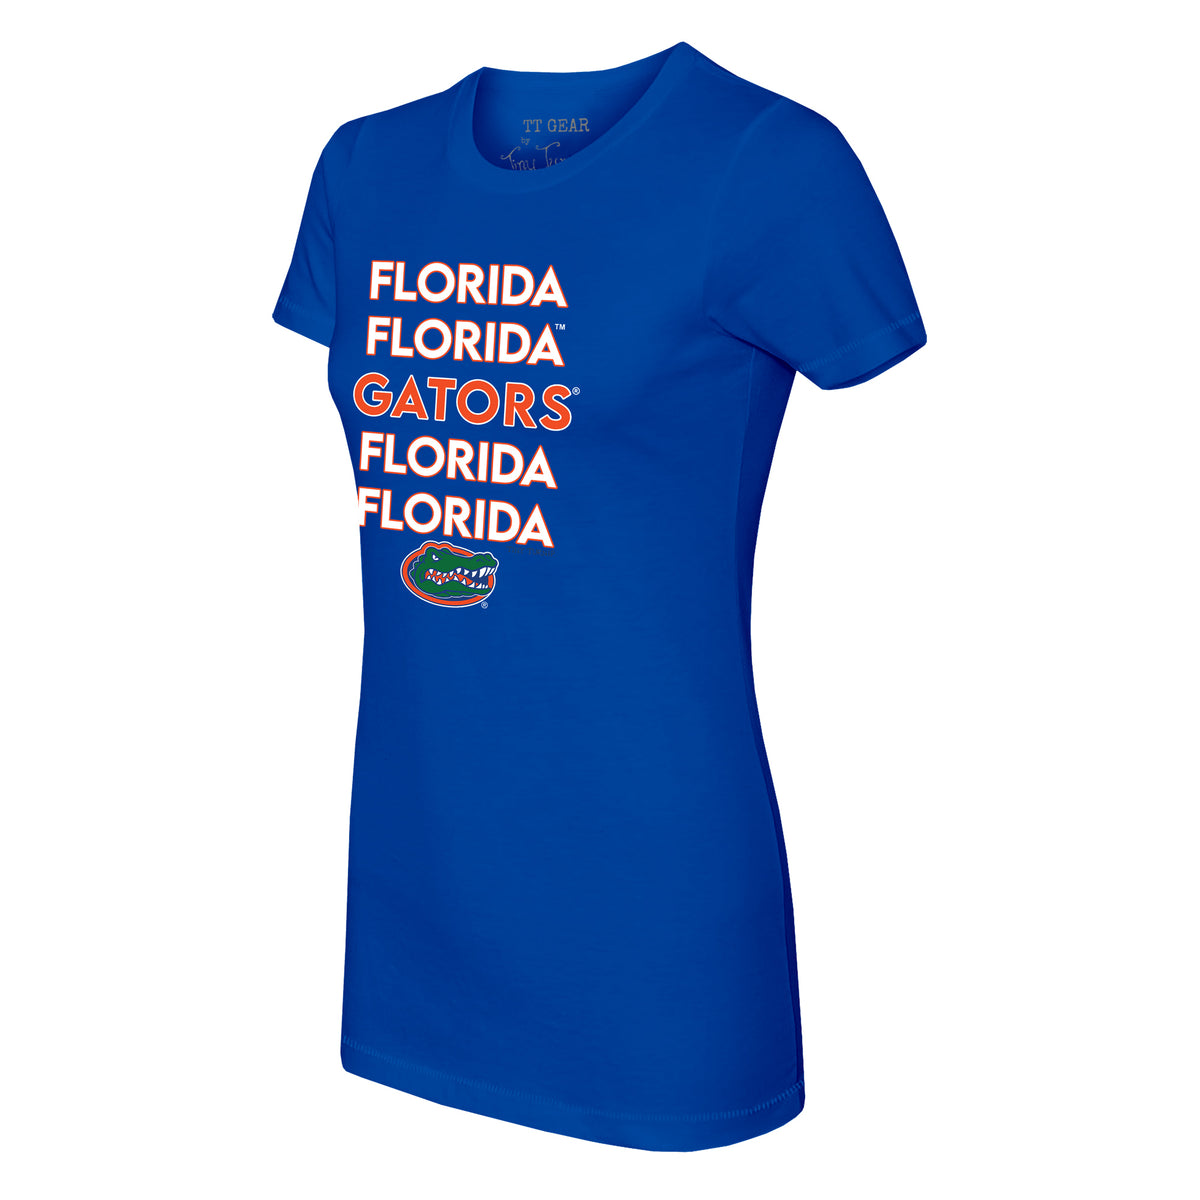 Florida Gators Stacked Tee Shirt